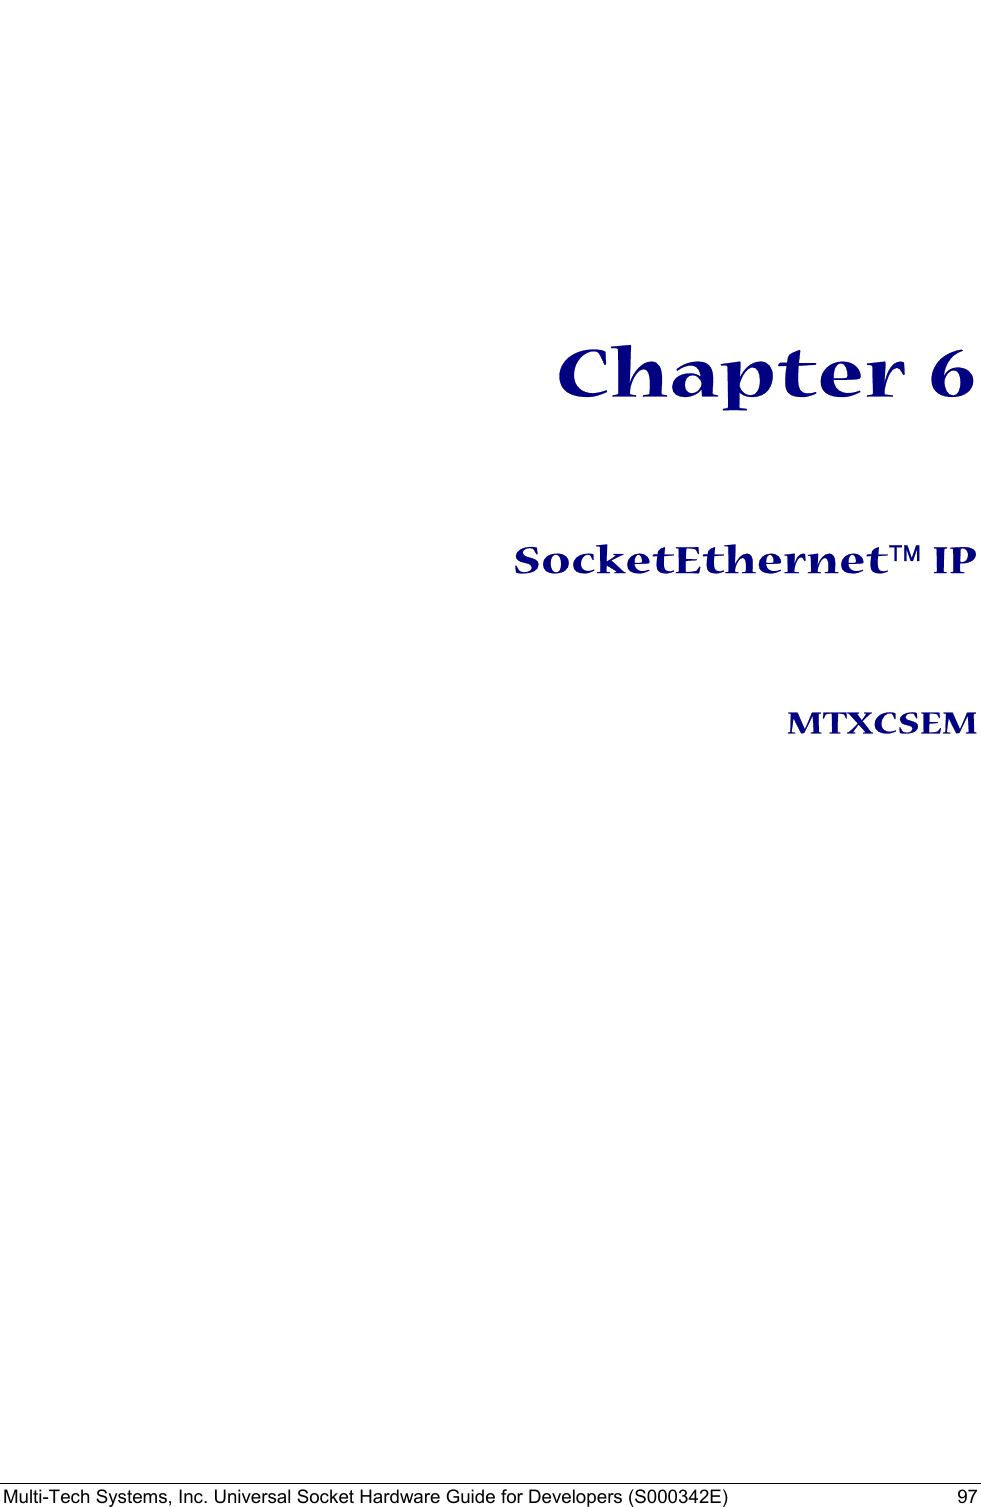  Multi-Tech Systems, Inc. Universal Socket Hardware Guide for Developers (S000342E)  97        Chapter 6   SocketEthernet IP   MTXCSEM  